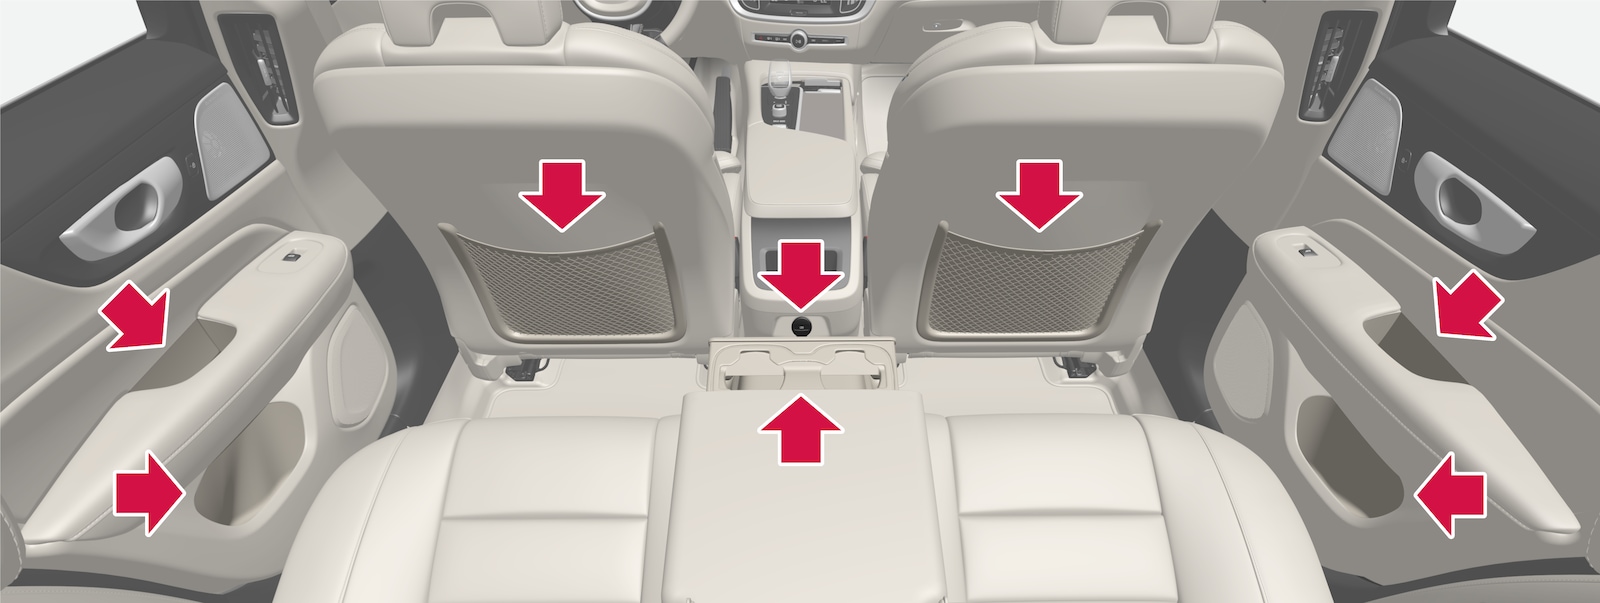 P5-2122-S/V60-Interior storage, back seat